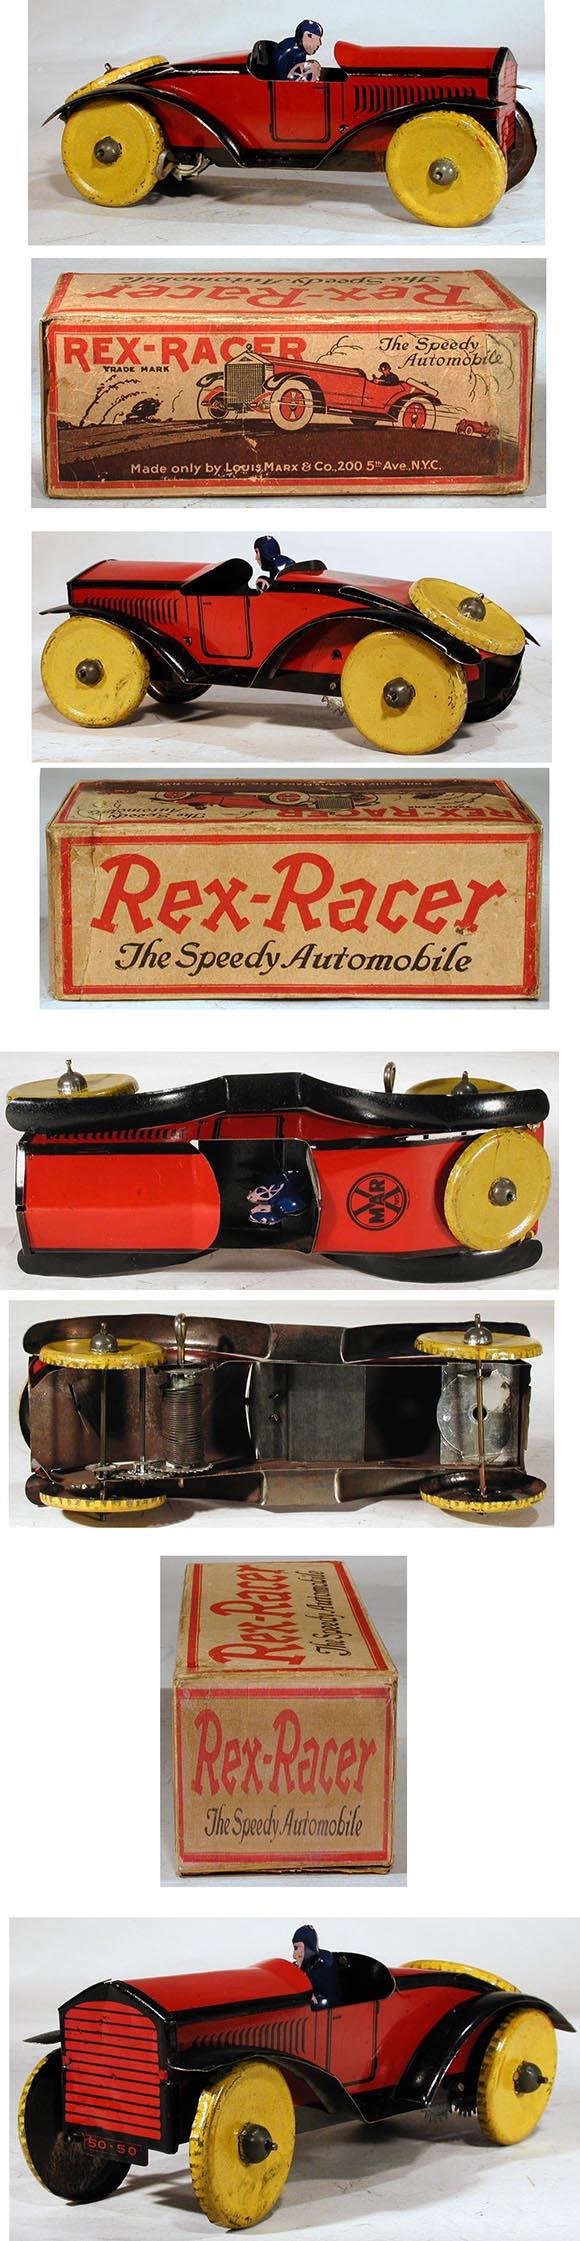 1923 Marx, Rex-Racer The Speedy Automobile in Original Box